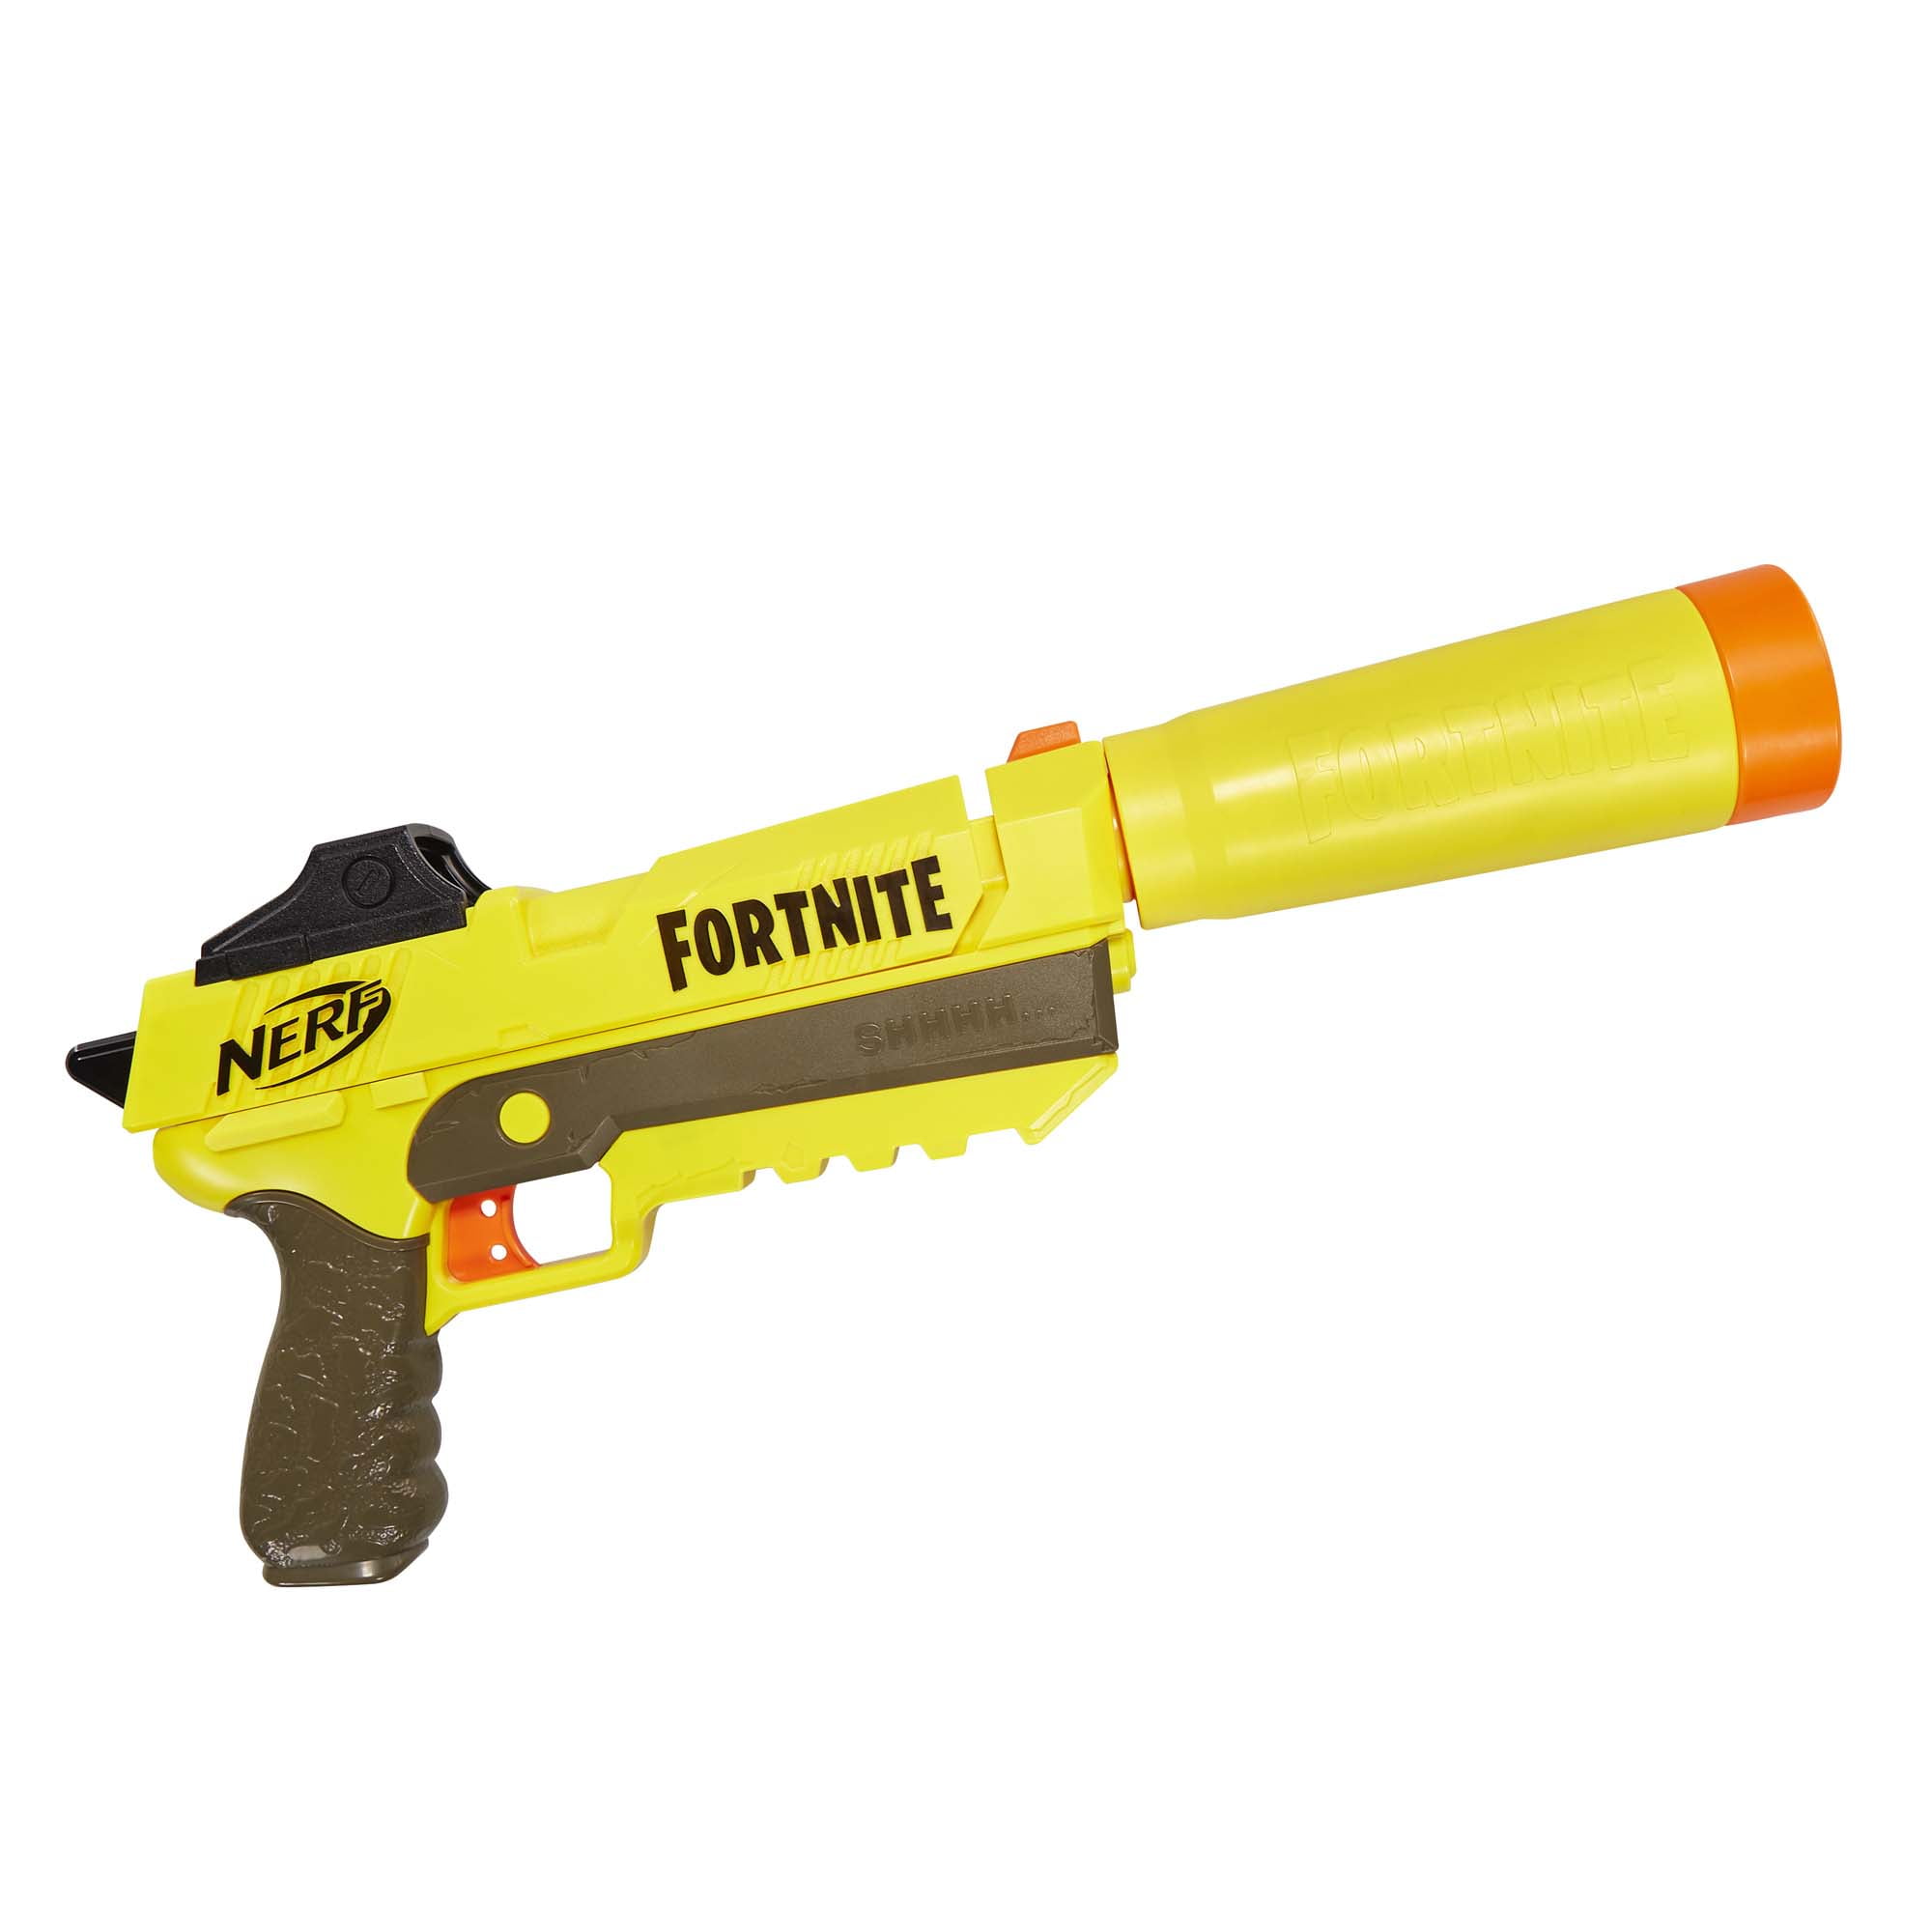 Nerf Fortnite SP-L Blaster gun Detachable Barrel Toy boys gift 6 fortnite darts 